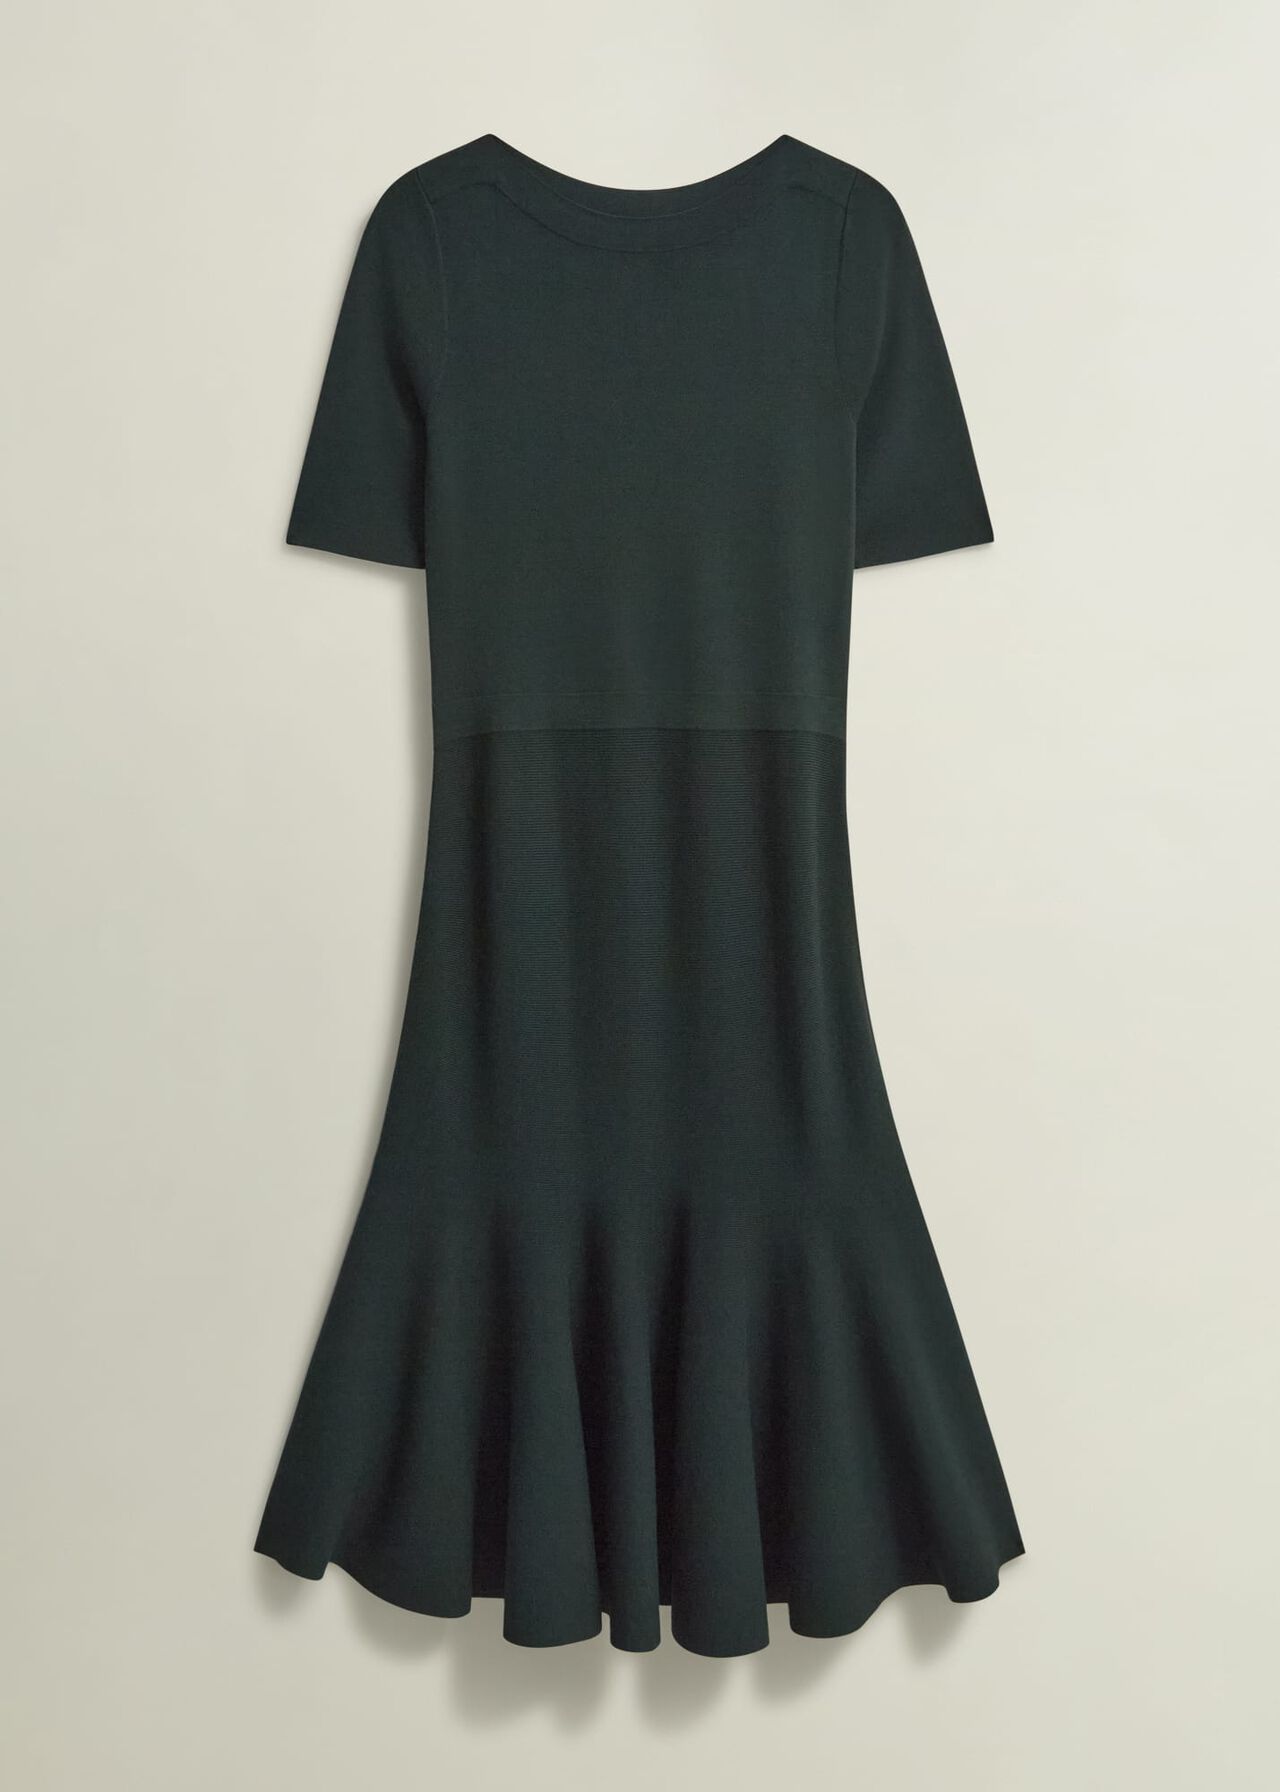 Abbie Knitted Dress, Samphire Green, hi-res